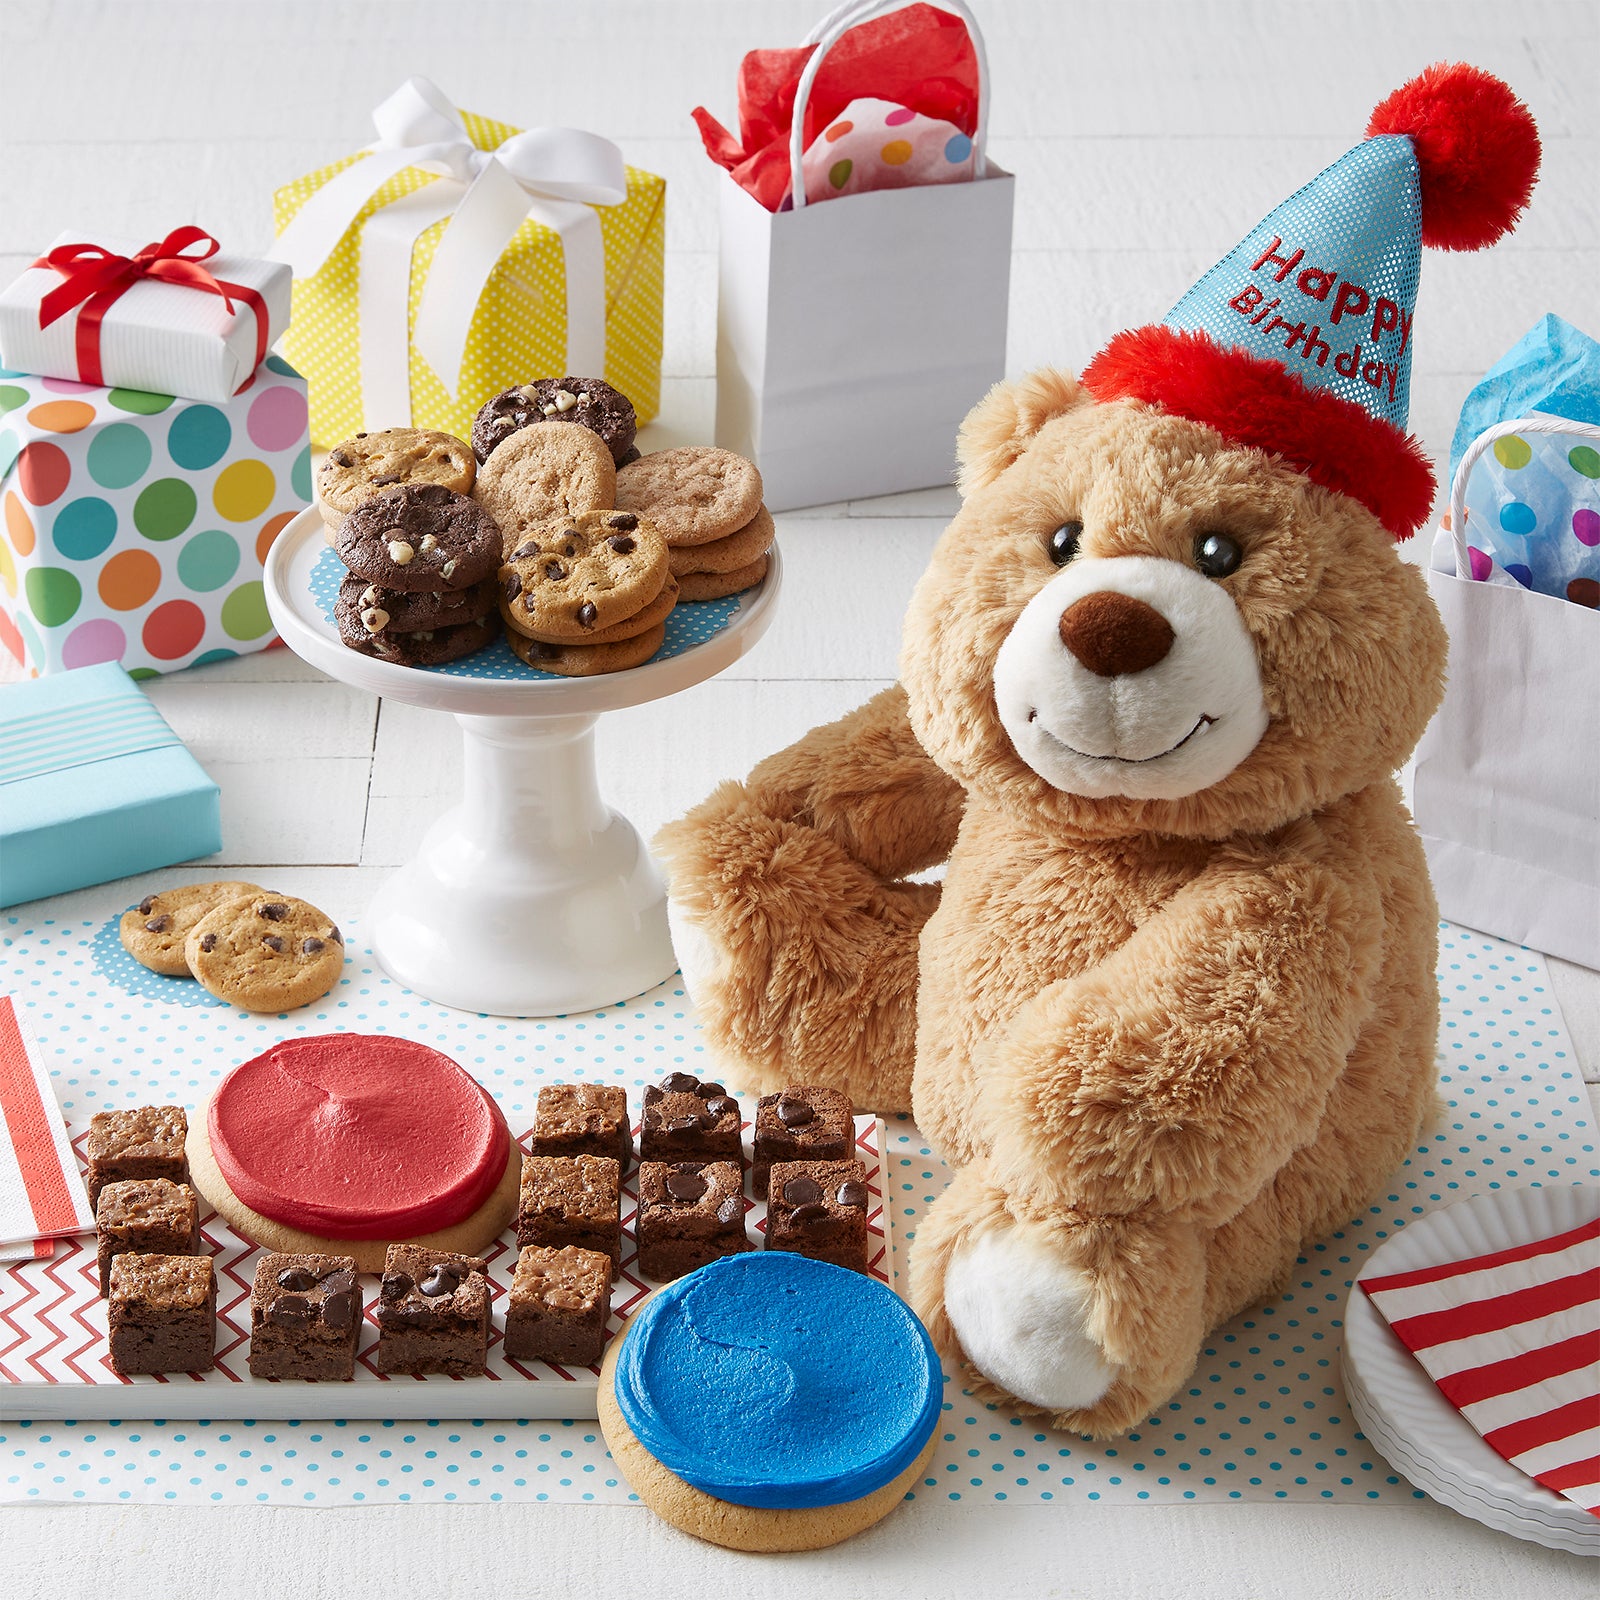 Kids Get Well Teddy Gift Box, Fun Gifts, Yummy Snacks